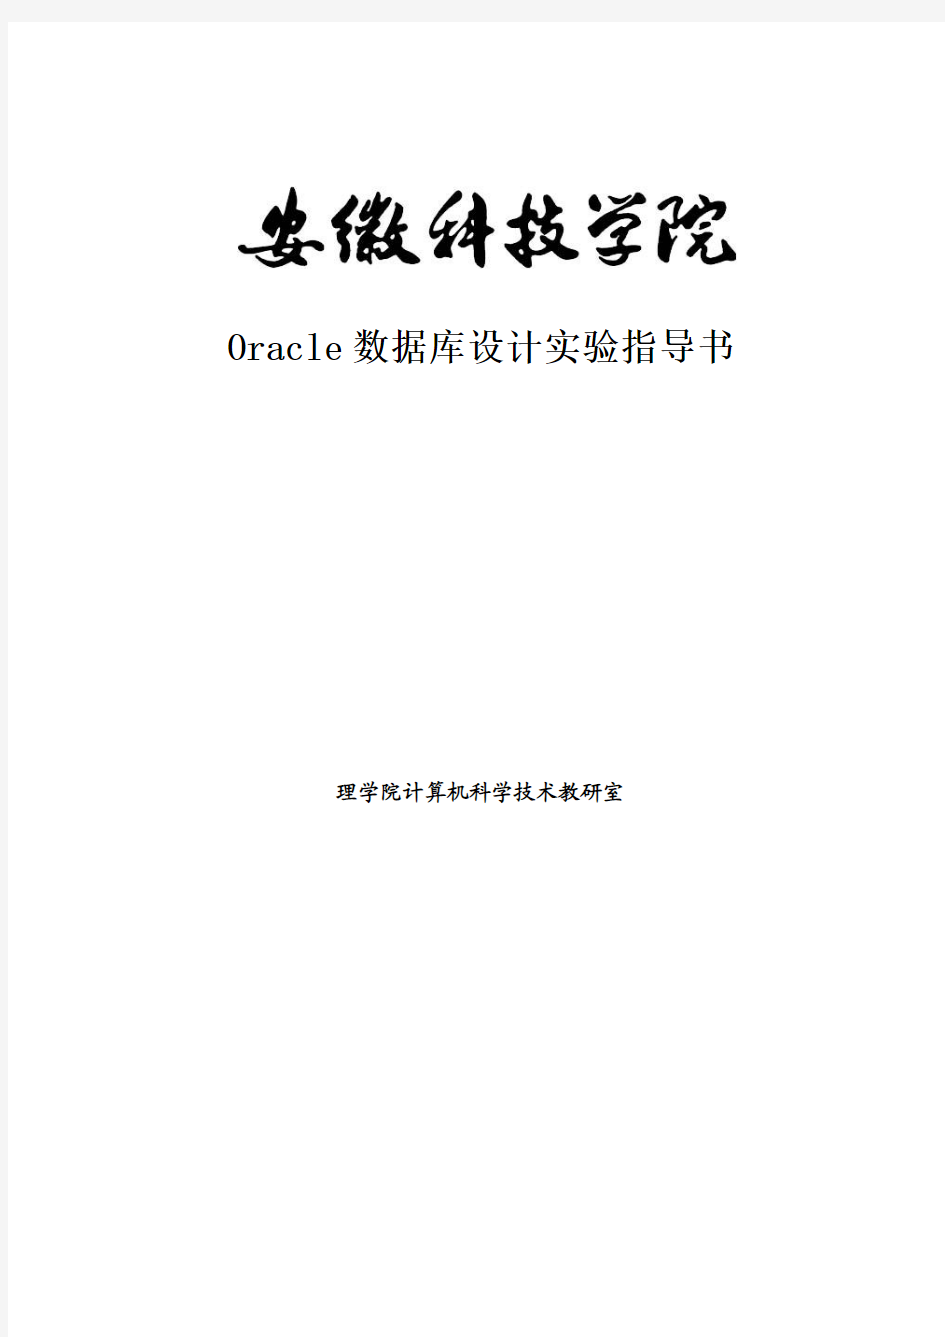 ORACLE数据库技术实验指导书3